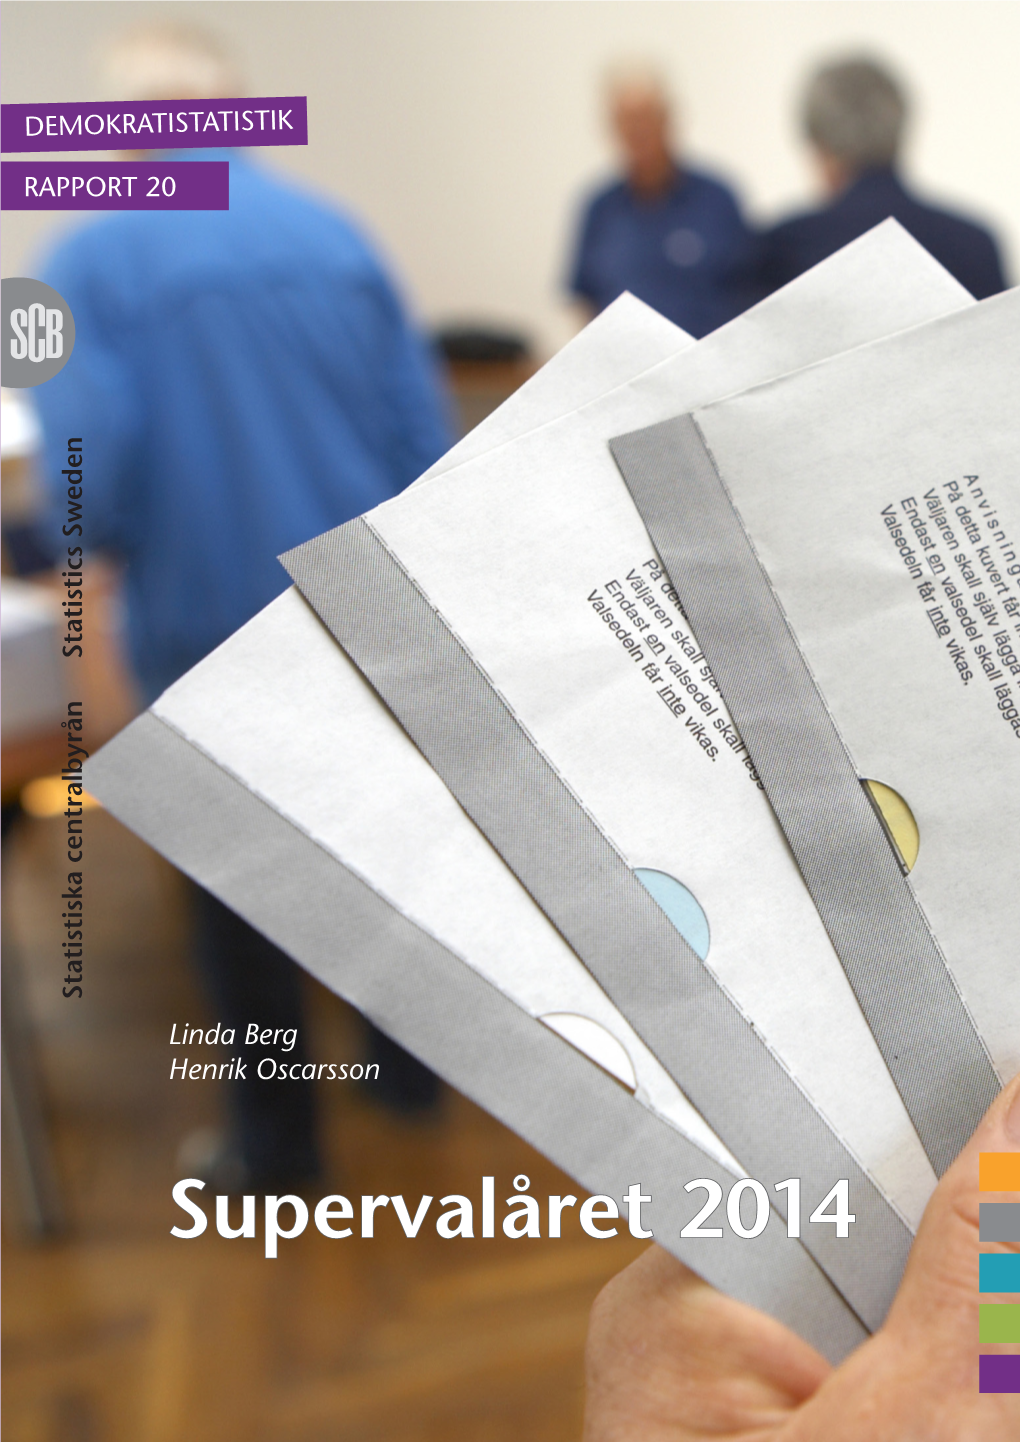 Supervalåret 2014 Rapporten Supervalåret 2014 Är Den Tjugonde Rapporten I SCB:S Rapportserie Demokratistatistik